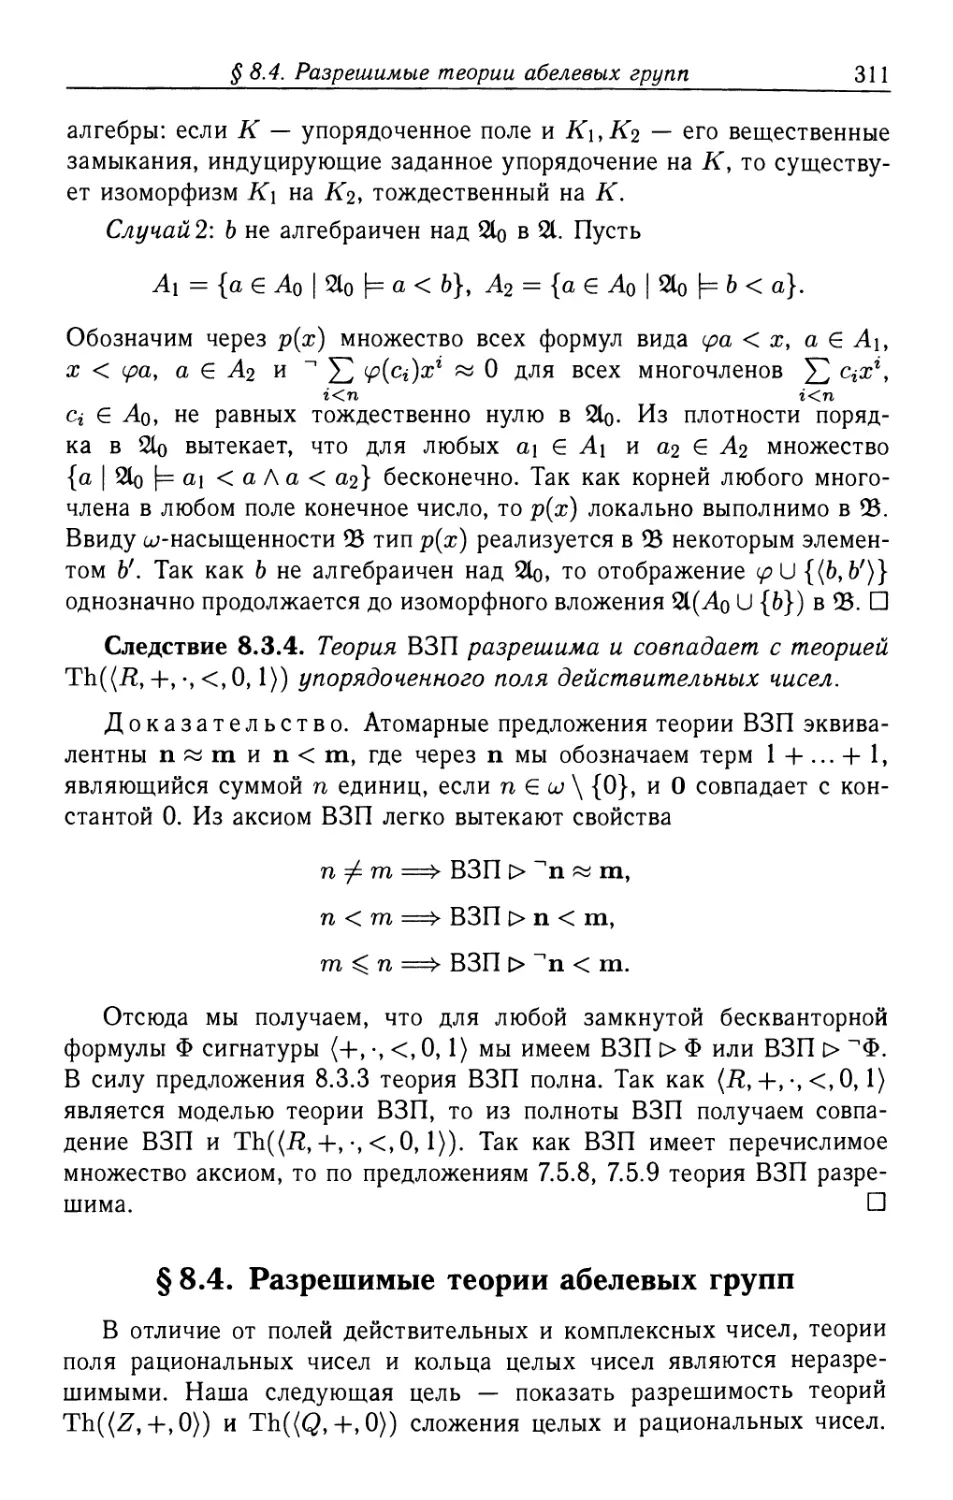 §8.4. Разрешимые теории абелевых групп